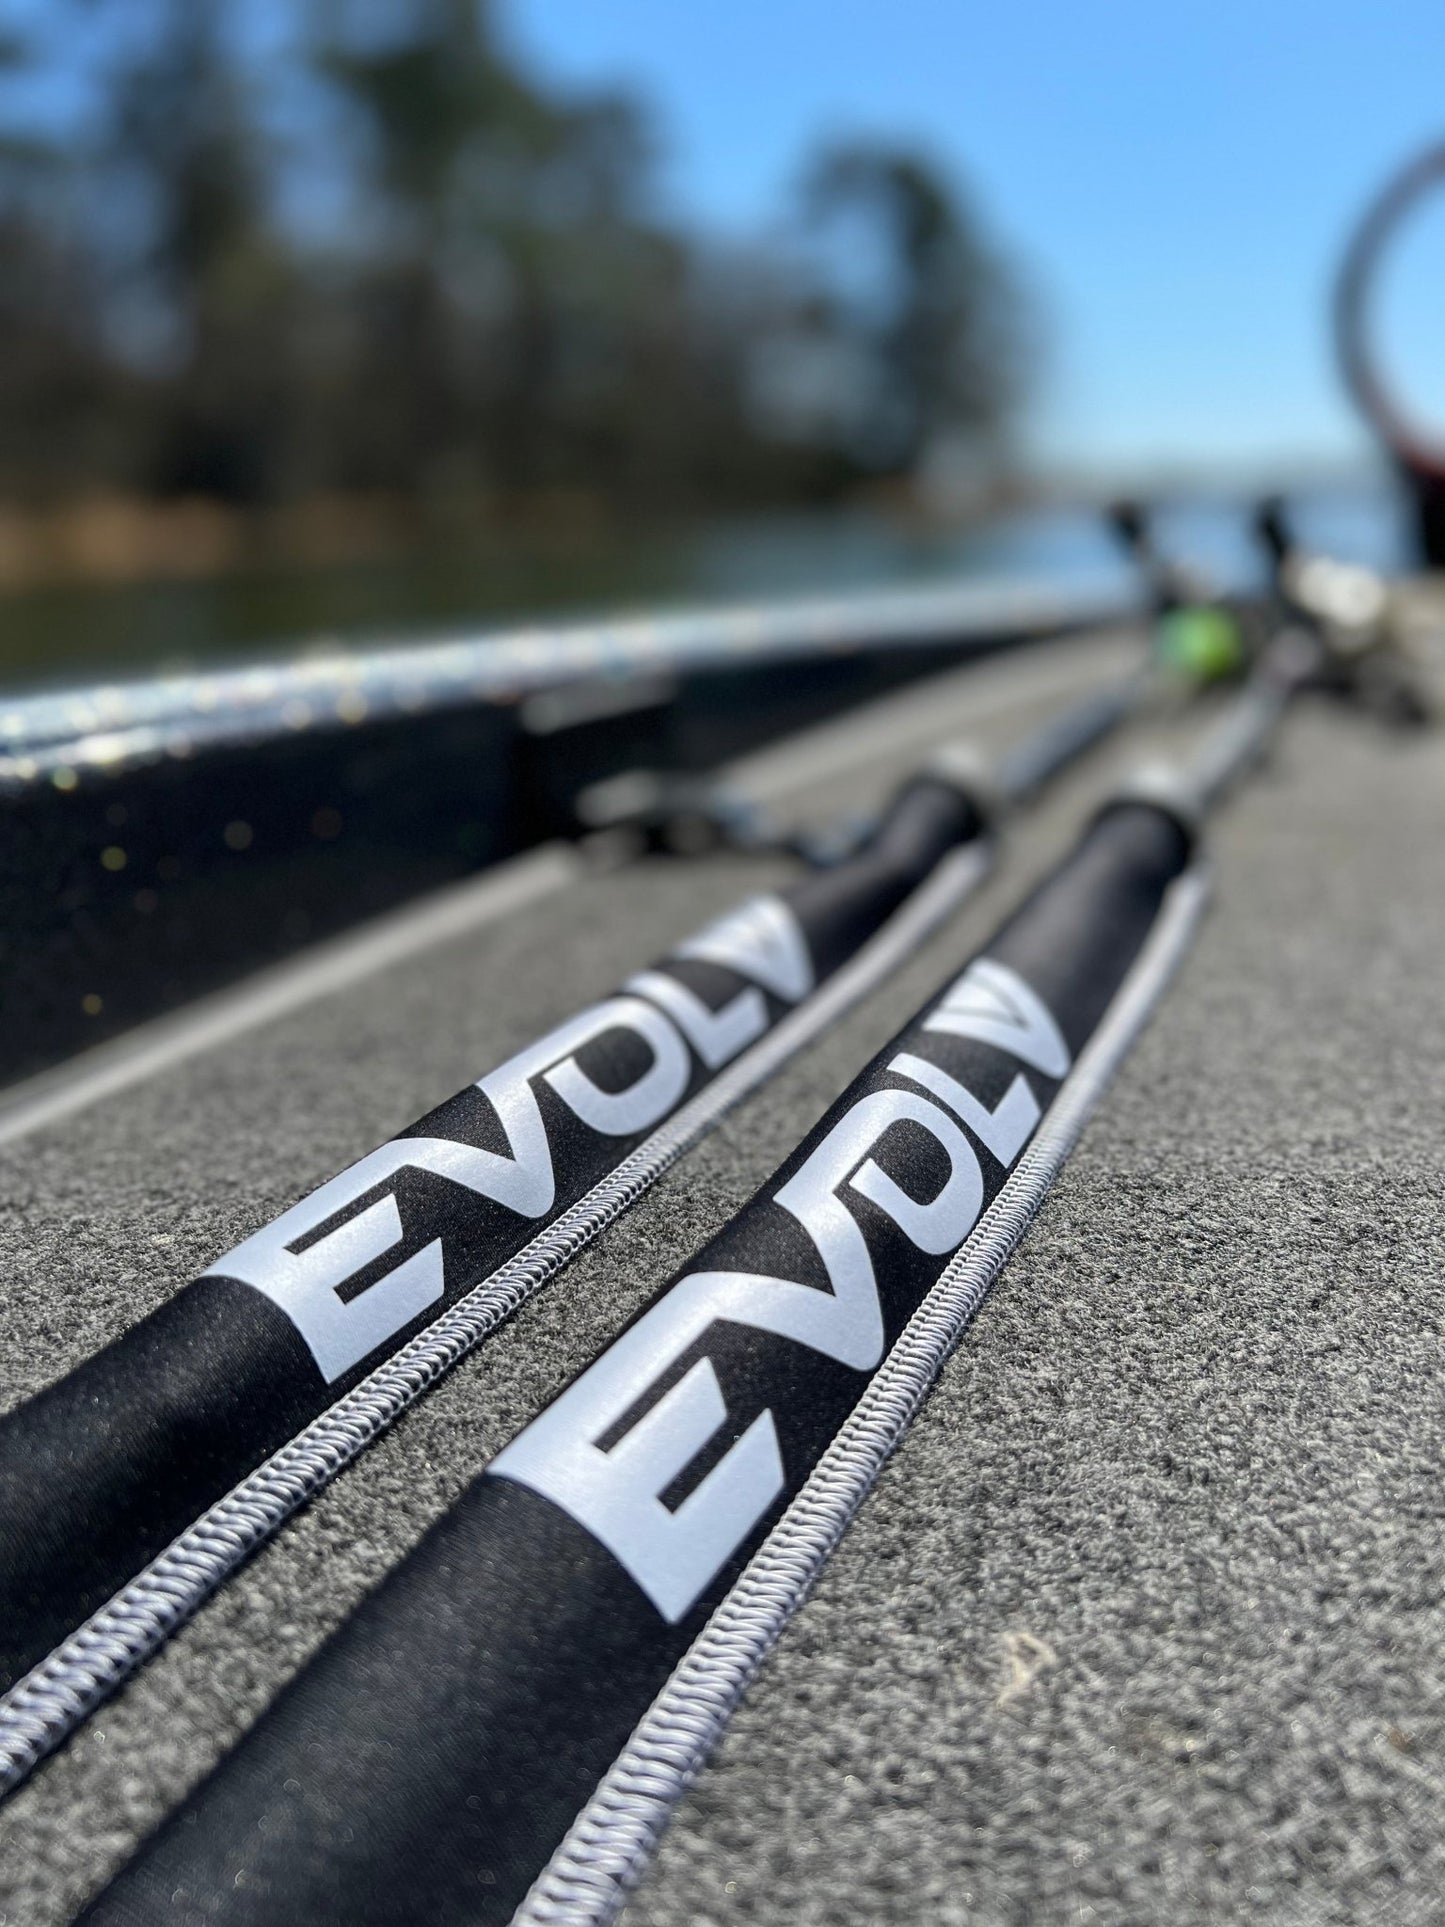 EVOLV - Tournament Edition - Baitcast Rod Sleeves - Angler's Pro Tackle & Outdoors